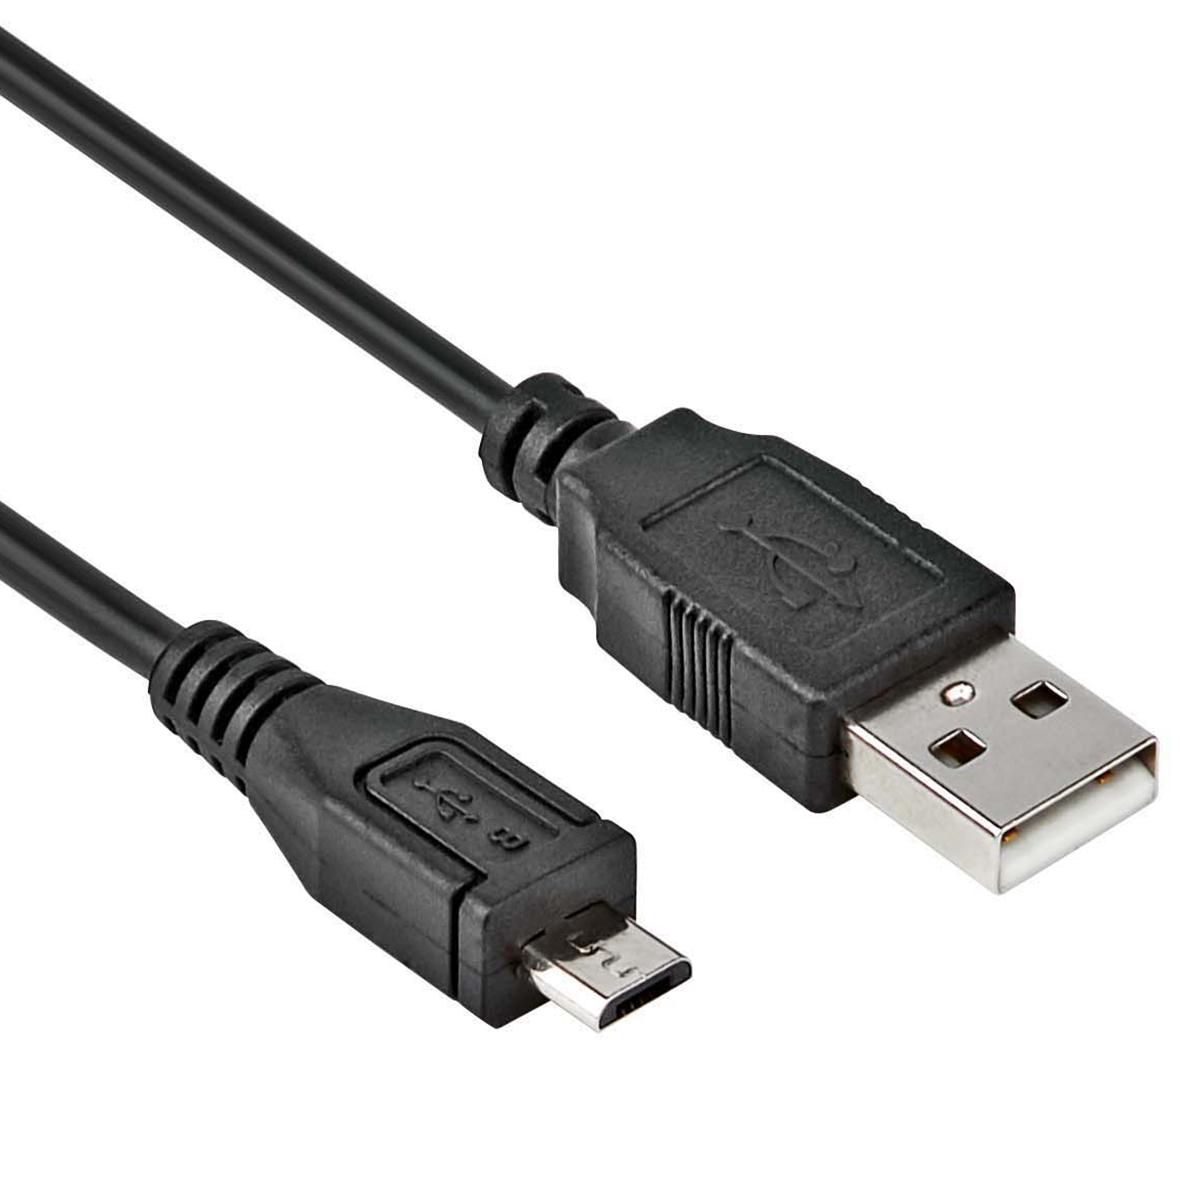 USB navigatie kabel - Allteq